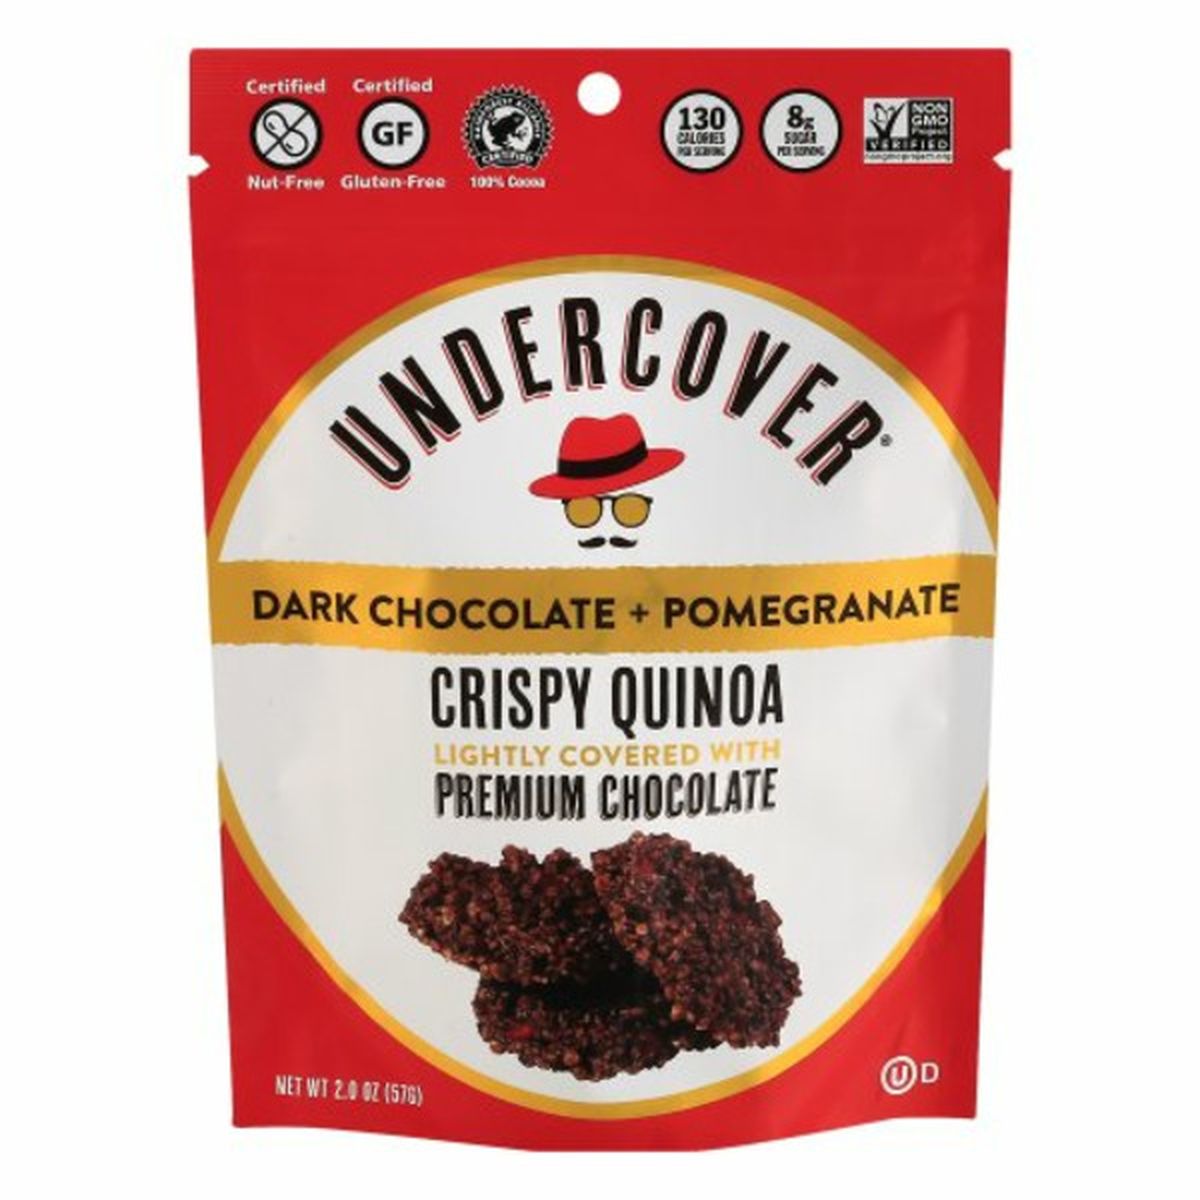 Calories in Undercover Crispy Quinoa, Dark Chocolate + Pomegranate